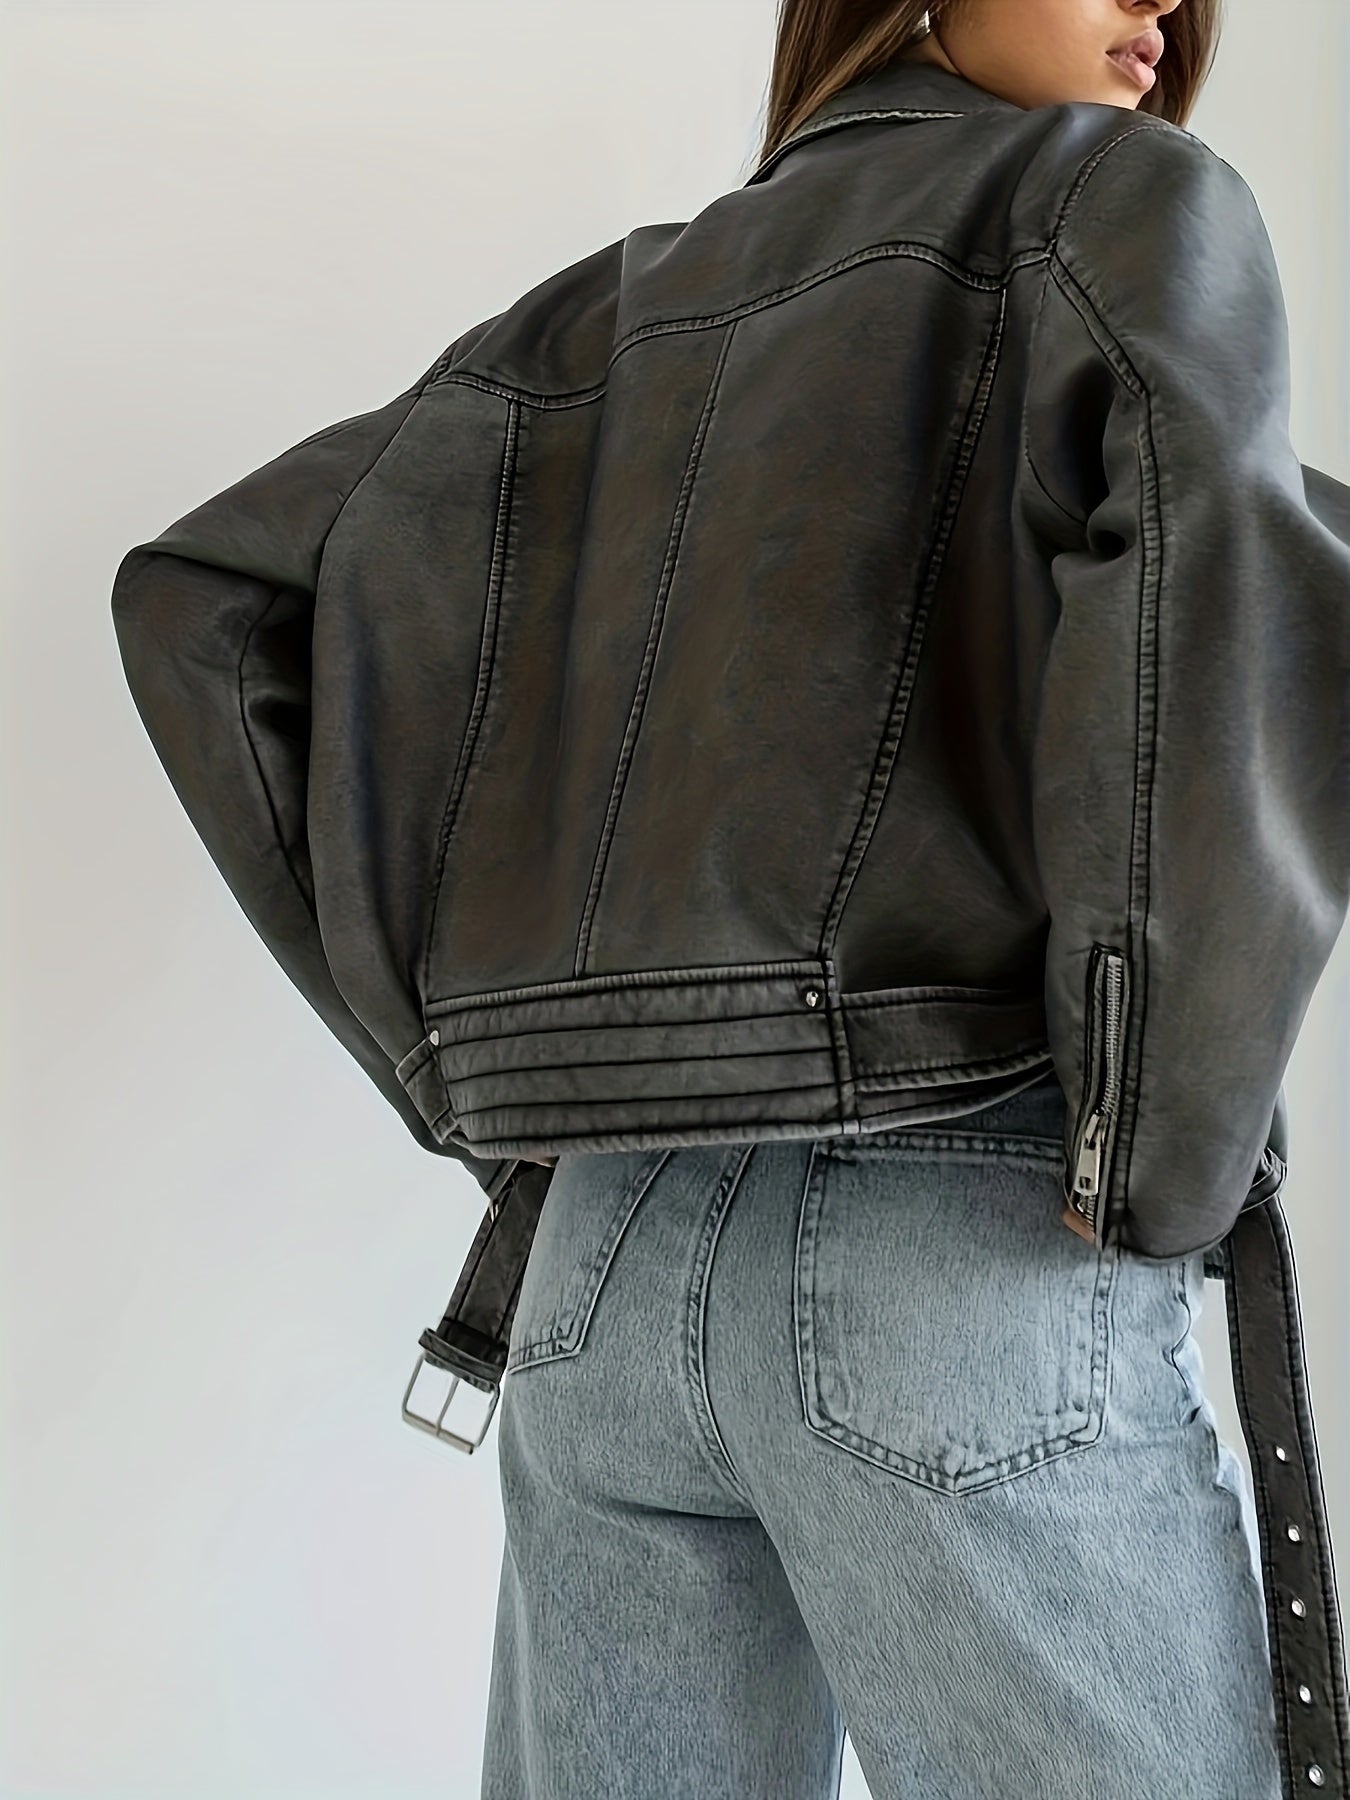 Antmvs Vintage Lapel Belted Biker Jacket, Long Sleeve Slant Zipper Pockets Loose Jacket, Women's Clothing